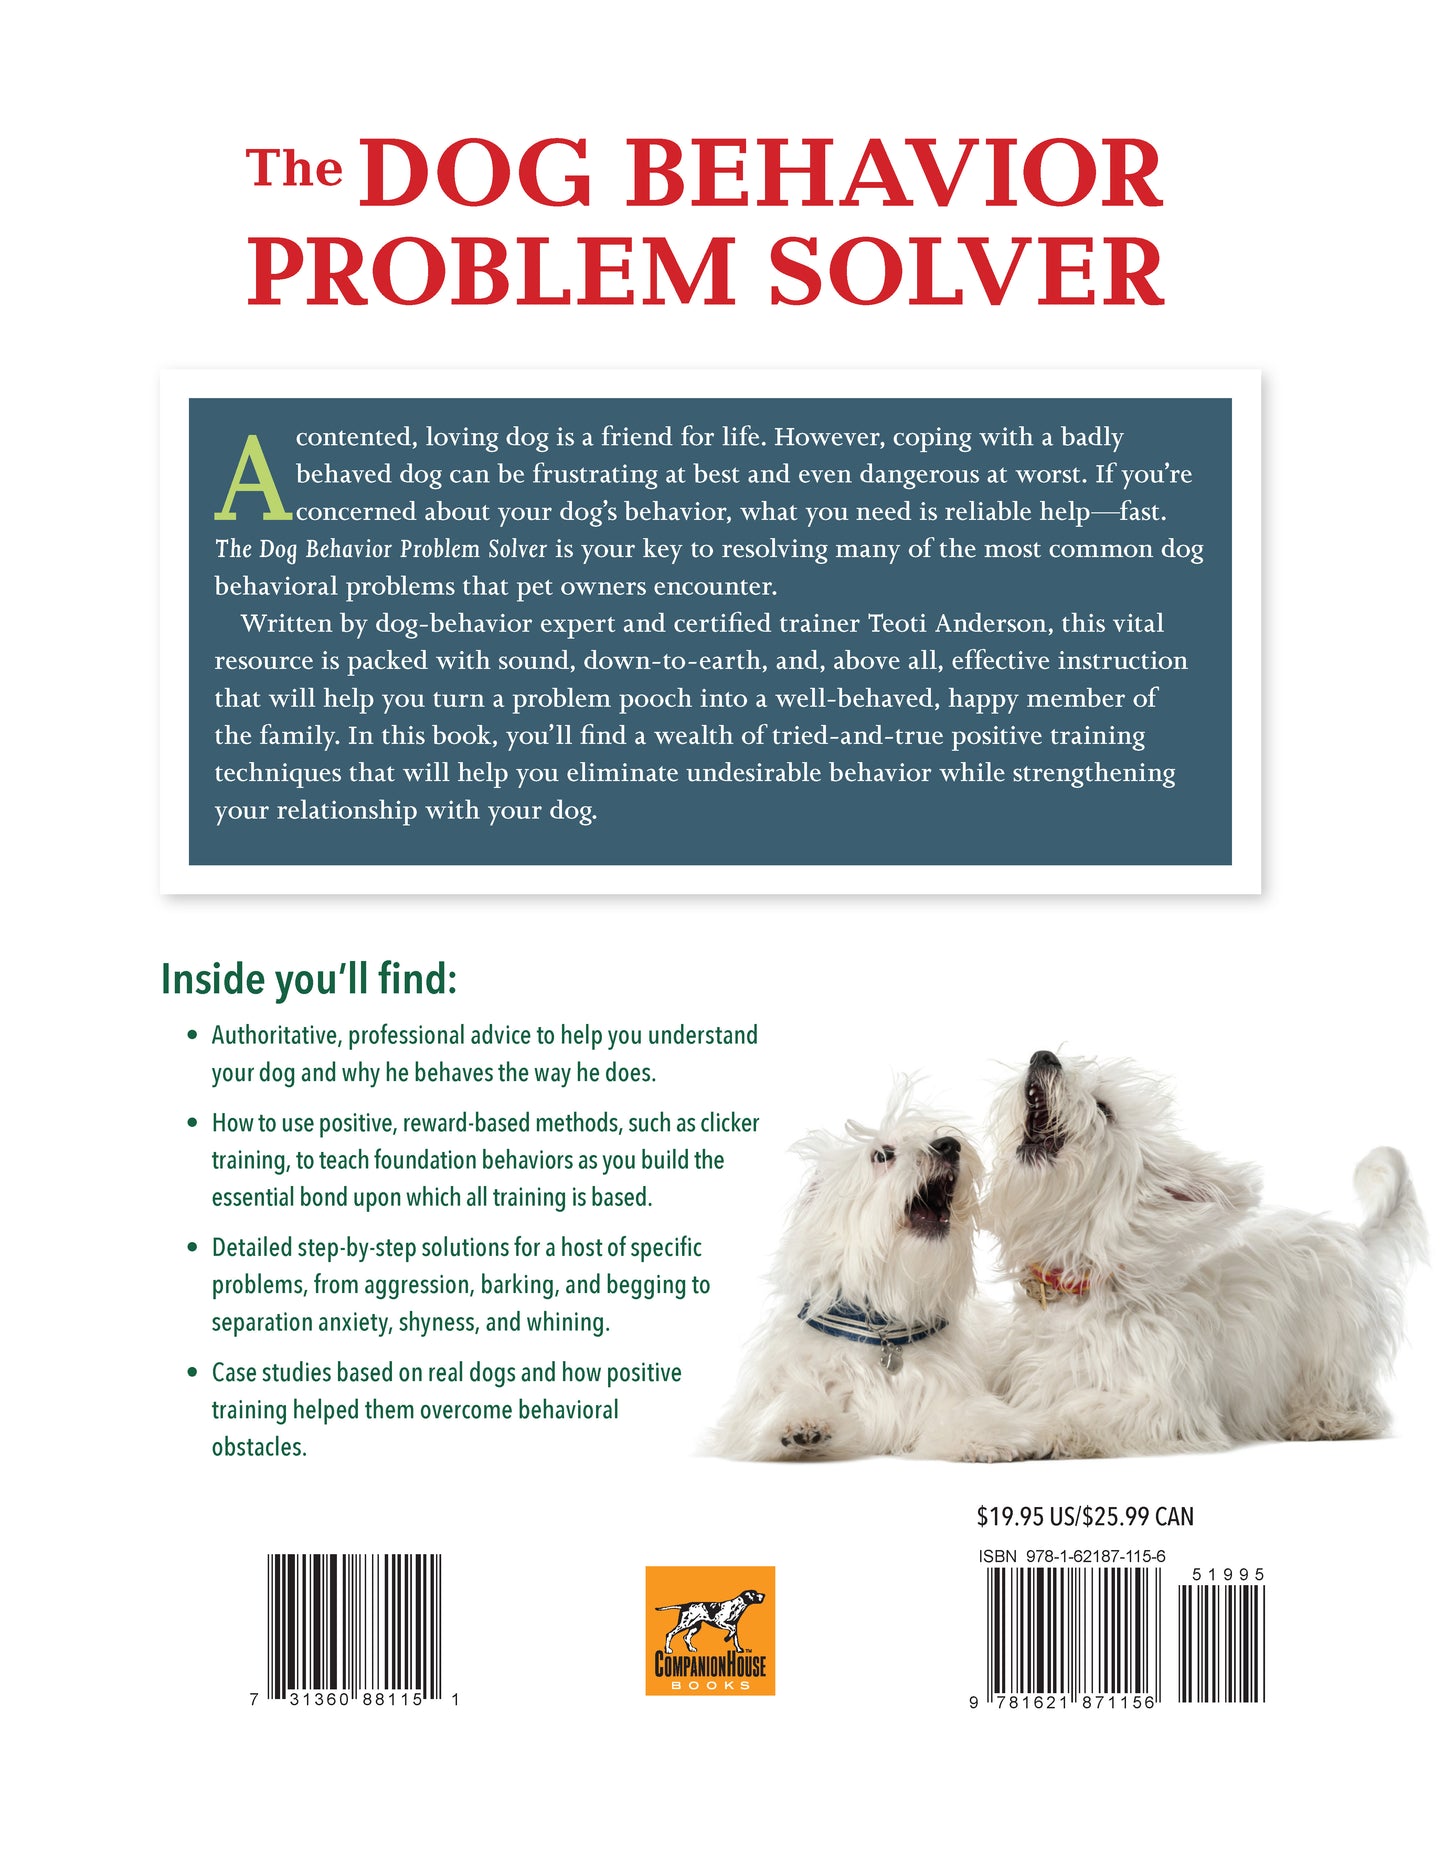 The Dog Behavior Problem Solver